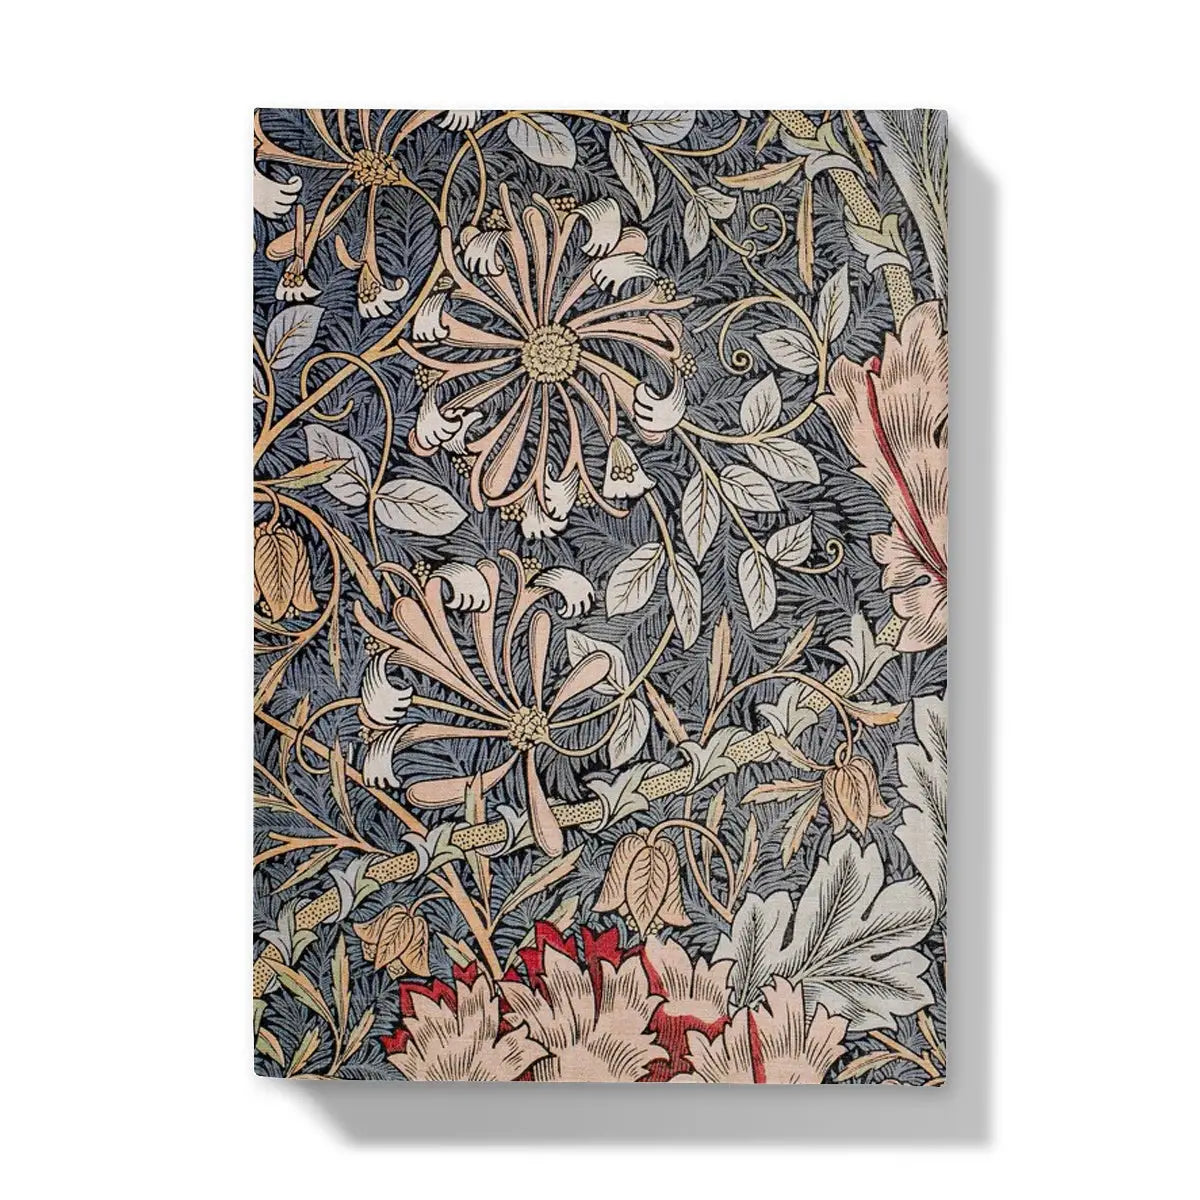 Honeysuckle - William Morris Decorative Floral Art Journal - Notebooks & Notepads - Aesthetic Art